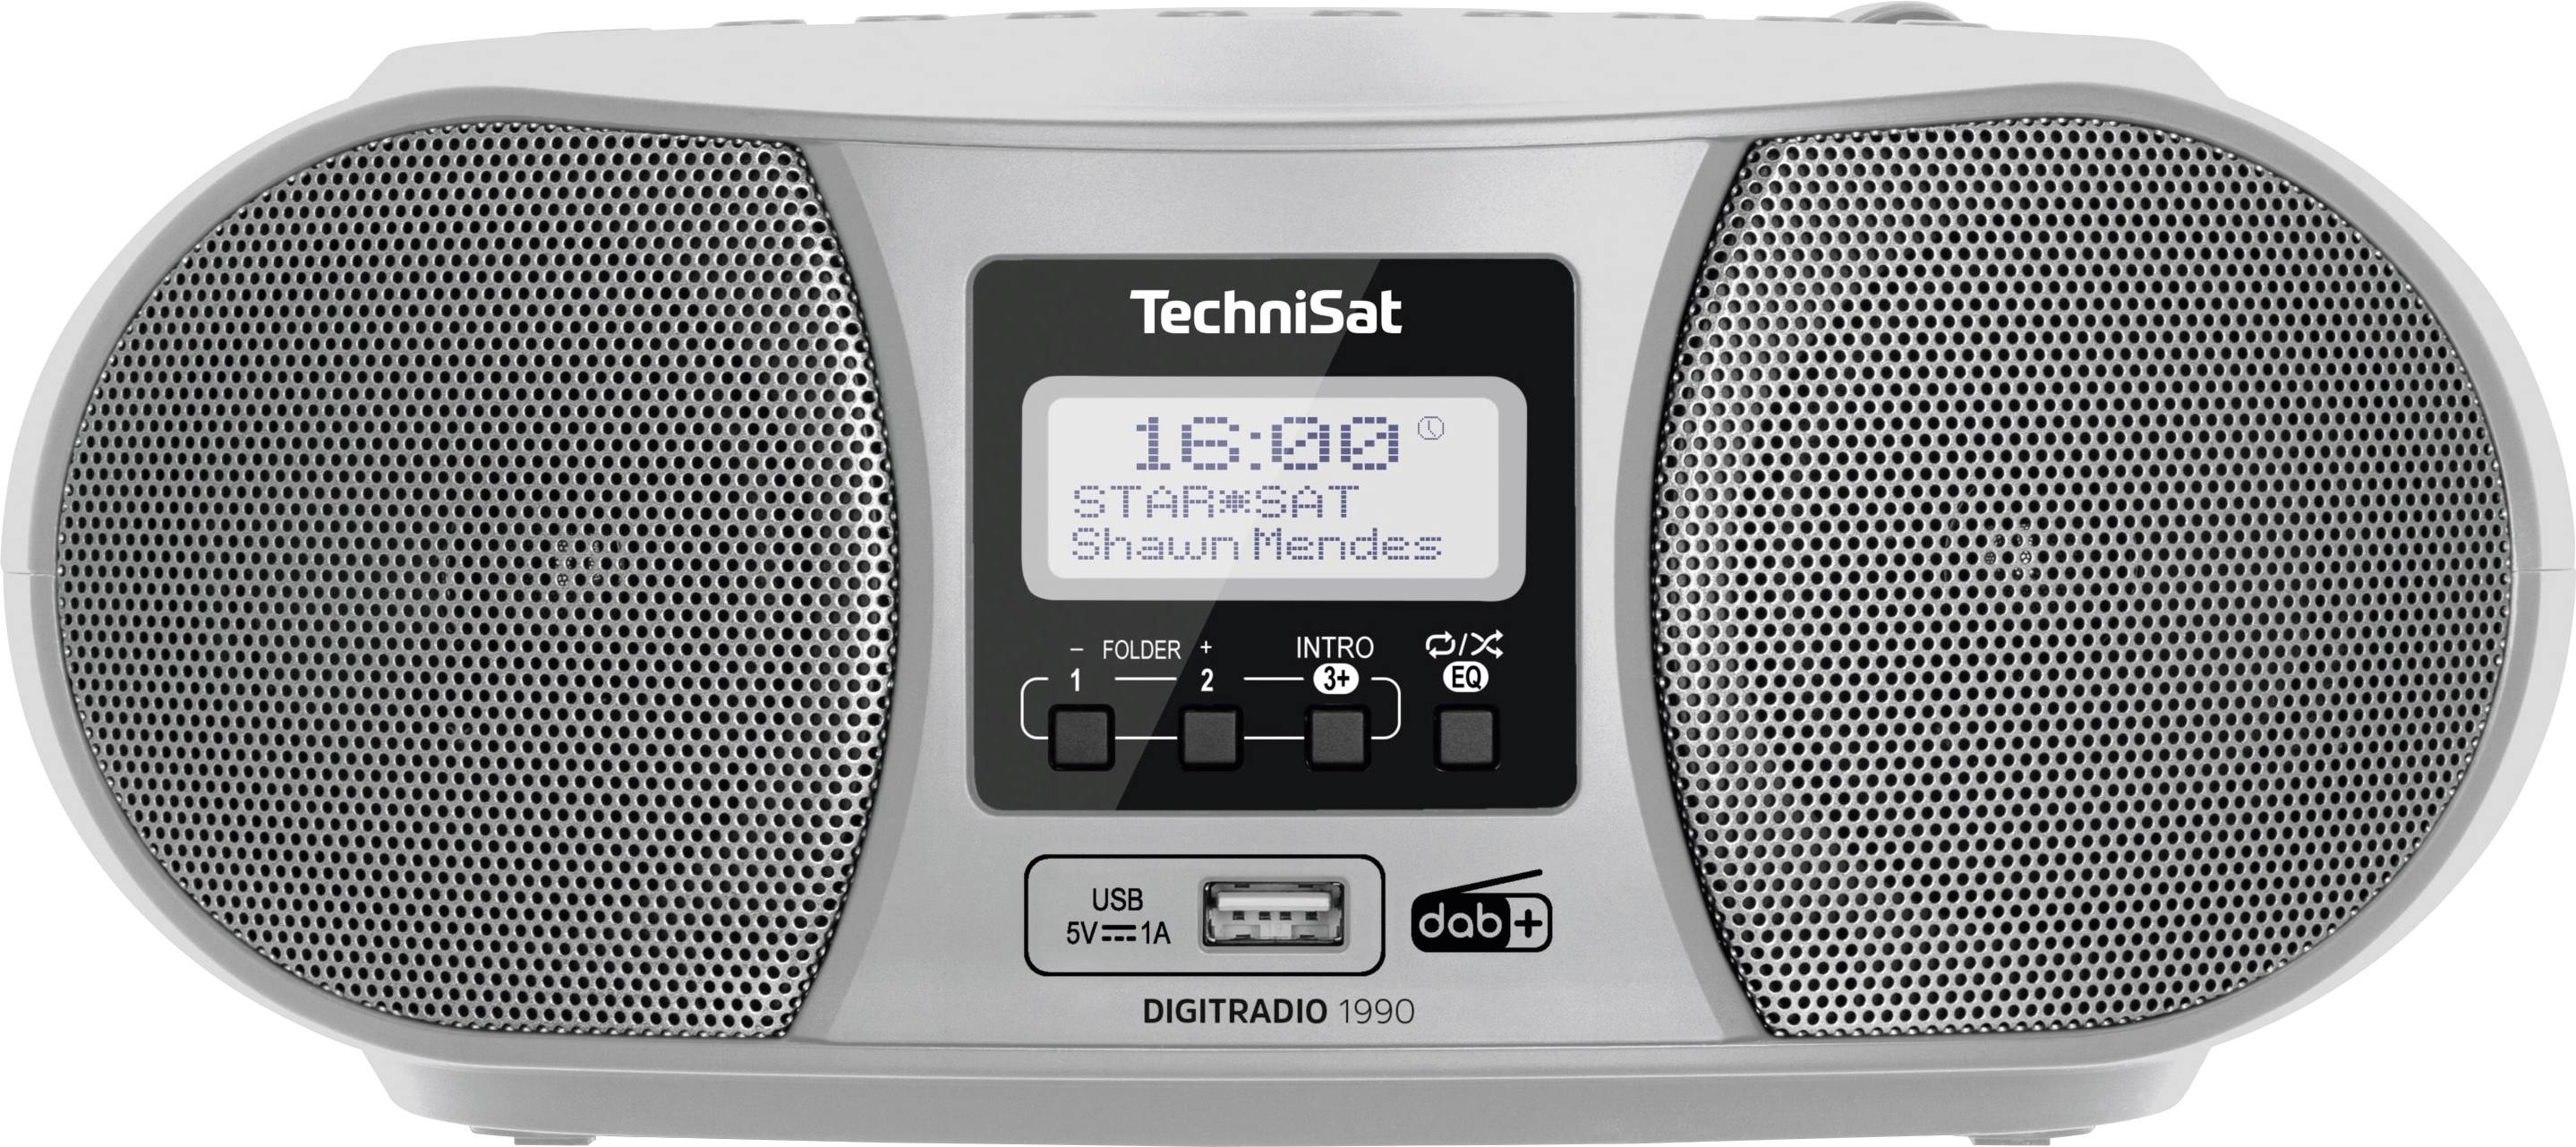 Bluetooth, AUX, TechniSat CD DAB+, Radio player 1990 DIGITRADIO USB Conrad | Electronic charger, Buy Alarm FM Silver clock Battery CD,